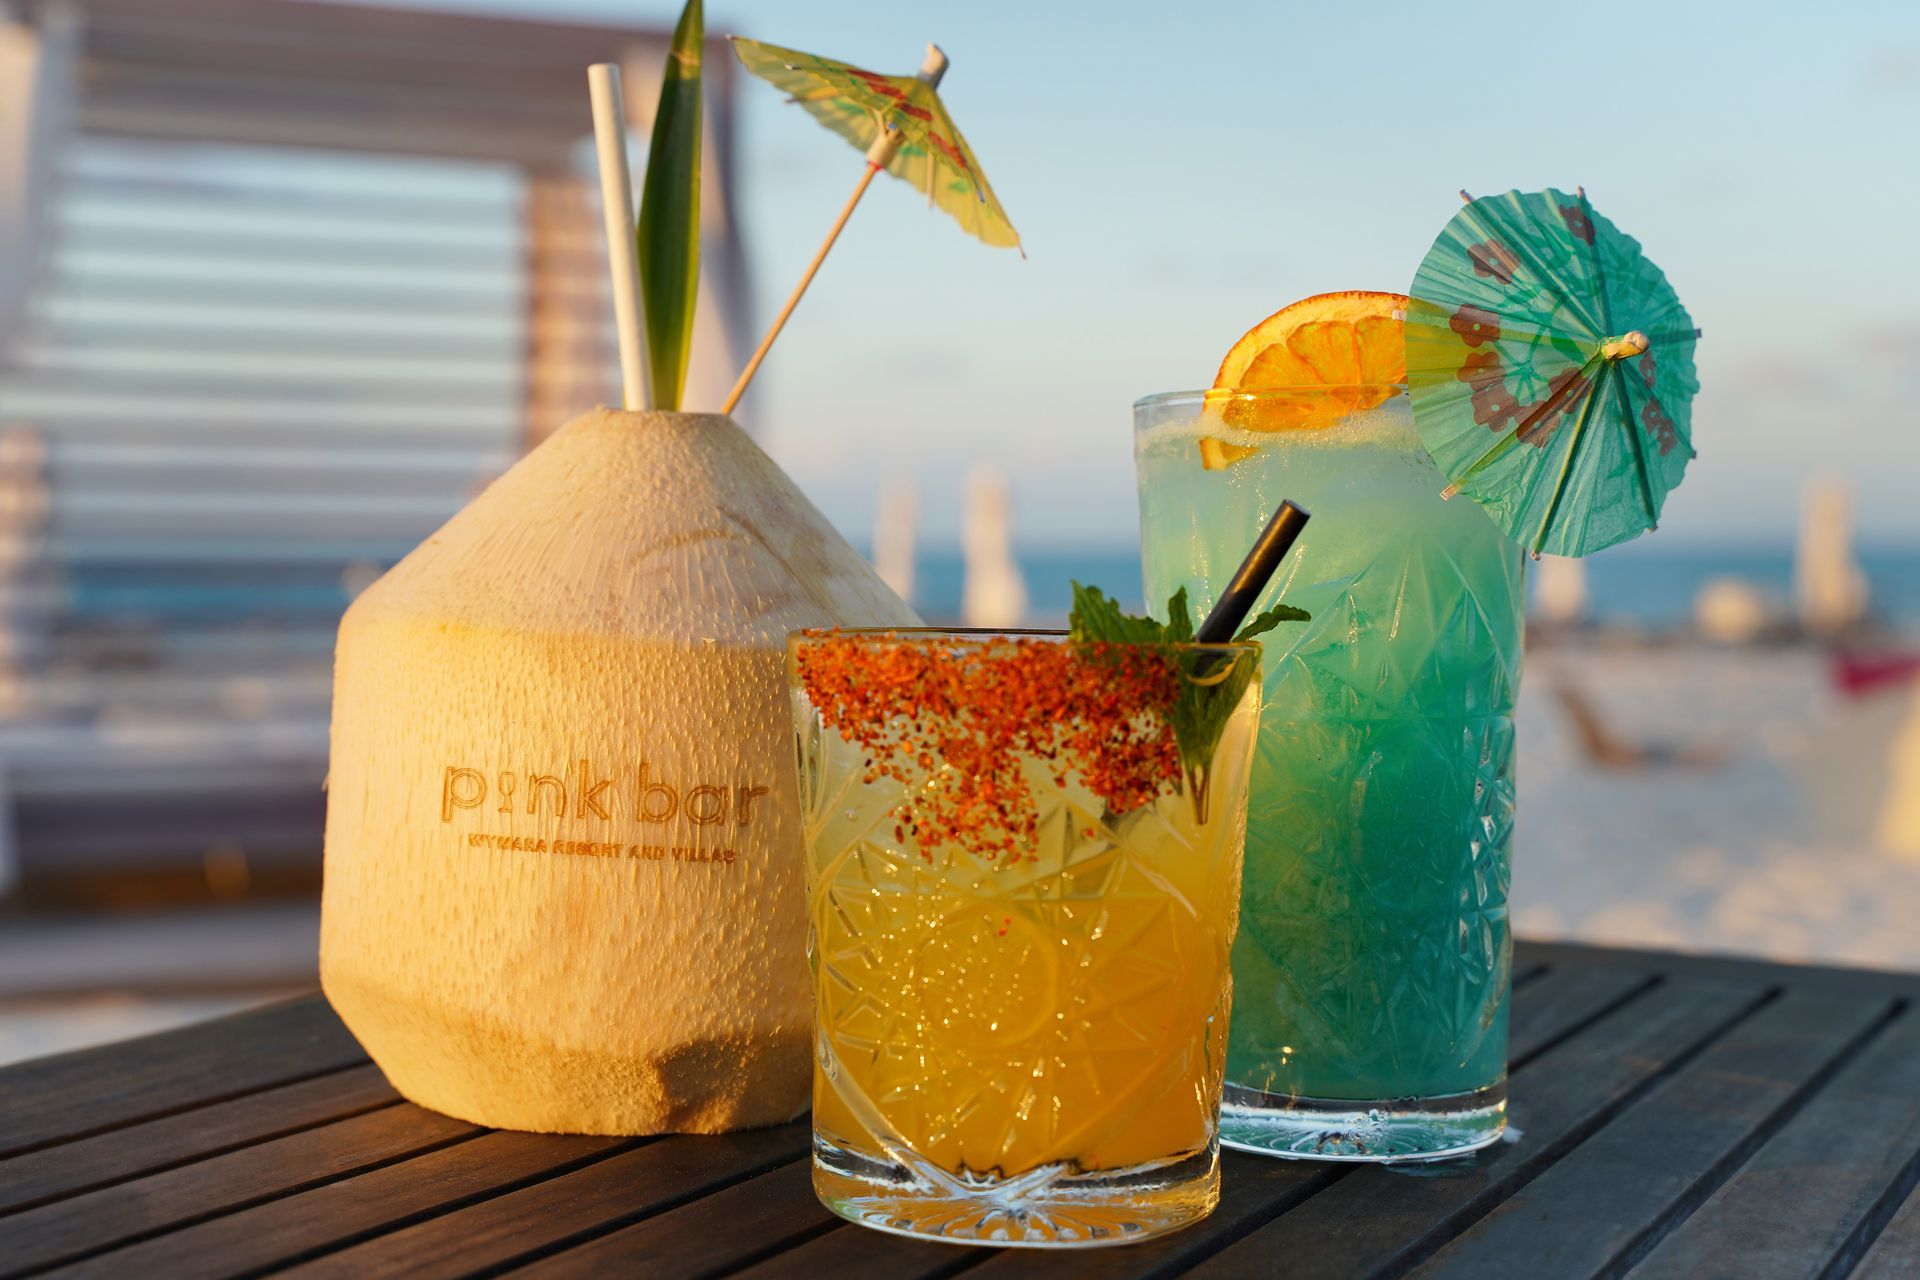 Pink Bar, Wymara Resort + Villas, Turks and Caicos